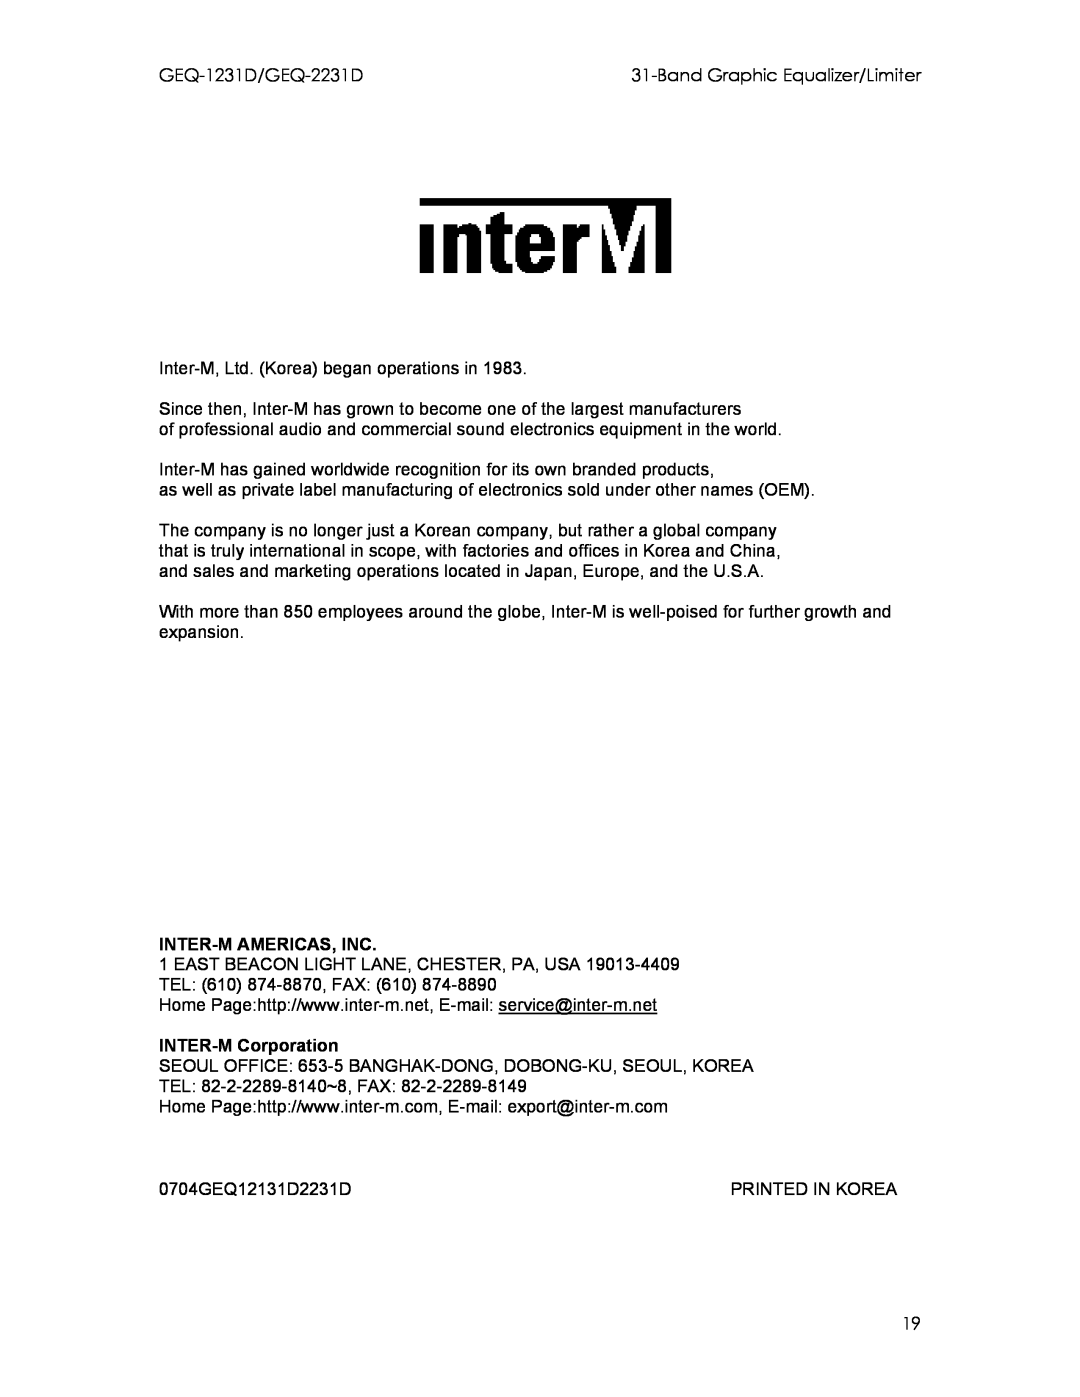 Intermec manual GEQ-1231D/GEQ-2231D, BandGraphic Equalizer/Limiter, Inter-Mamericas, Inc, INTER-MCorporation 